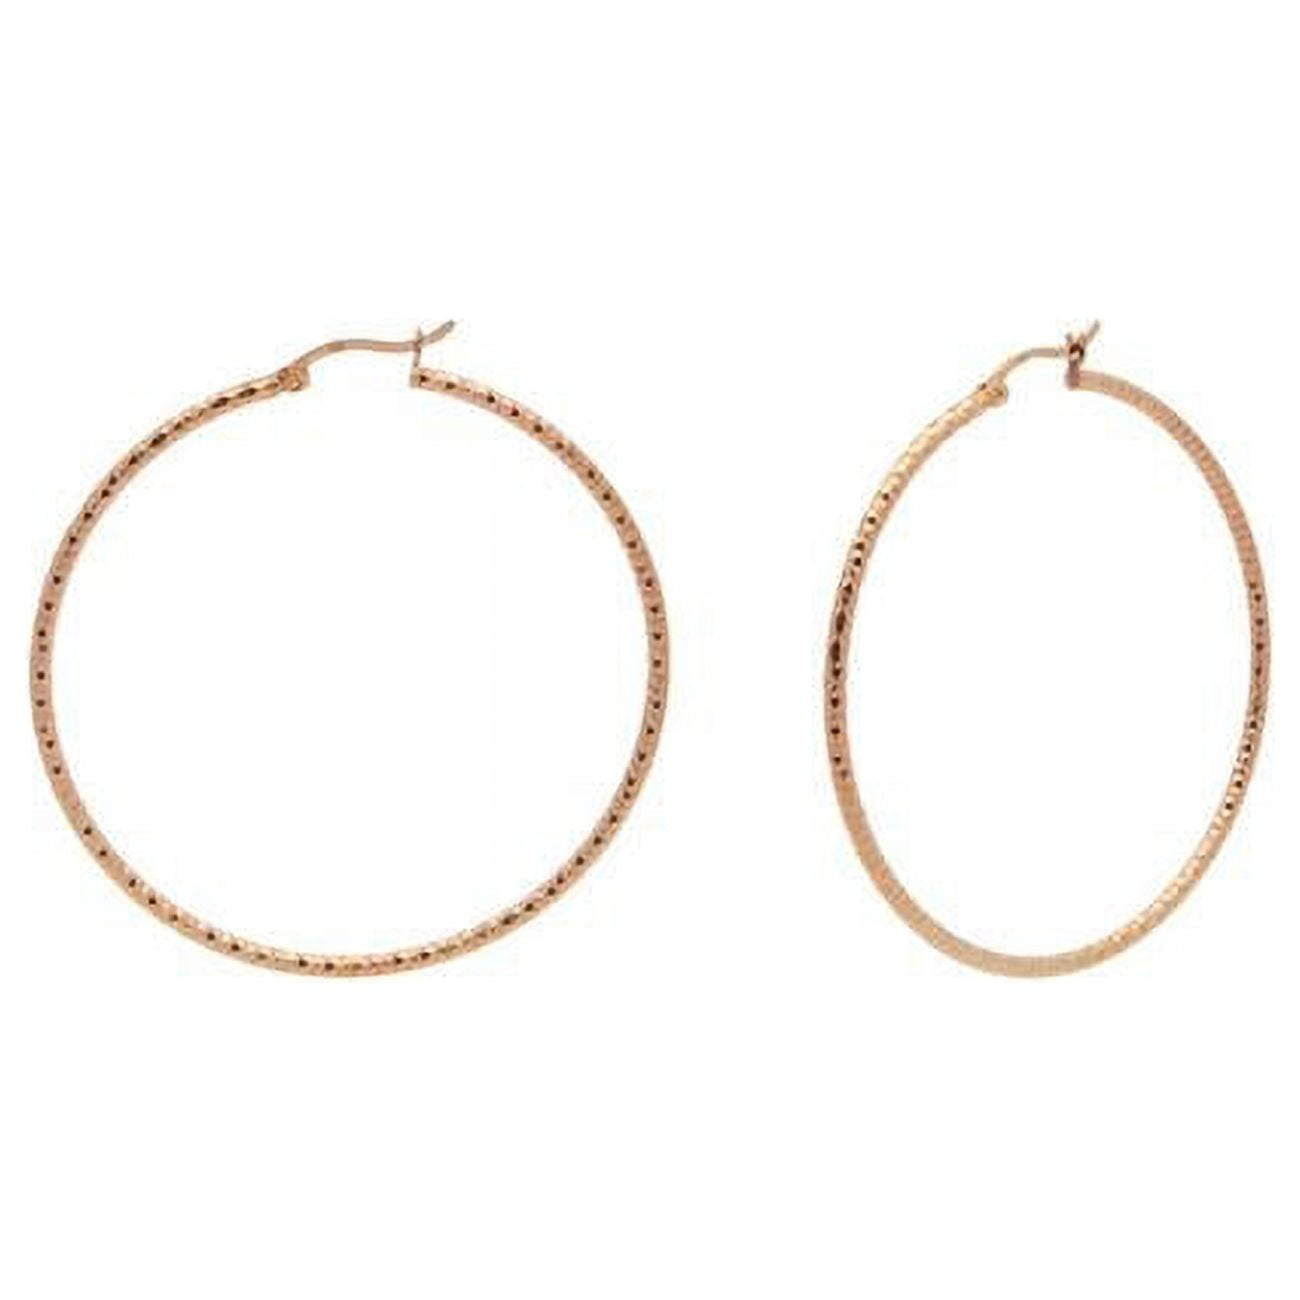 155111p Small Rose Gold Diamond Cut Hoop Earrings In Sterling Silver